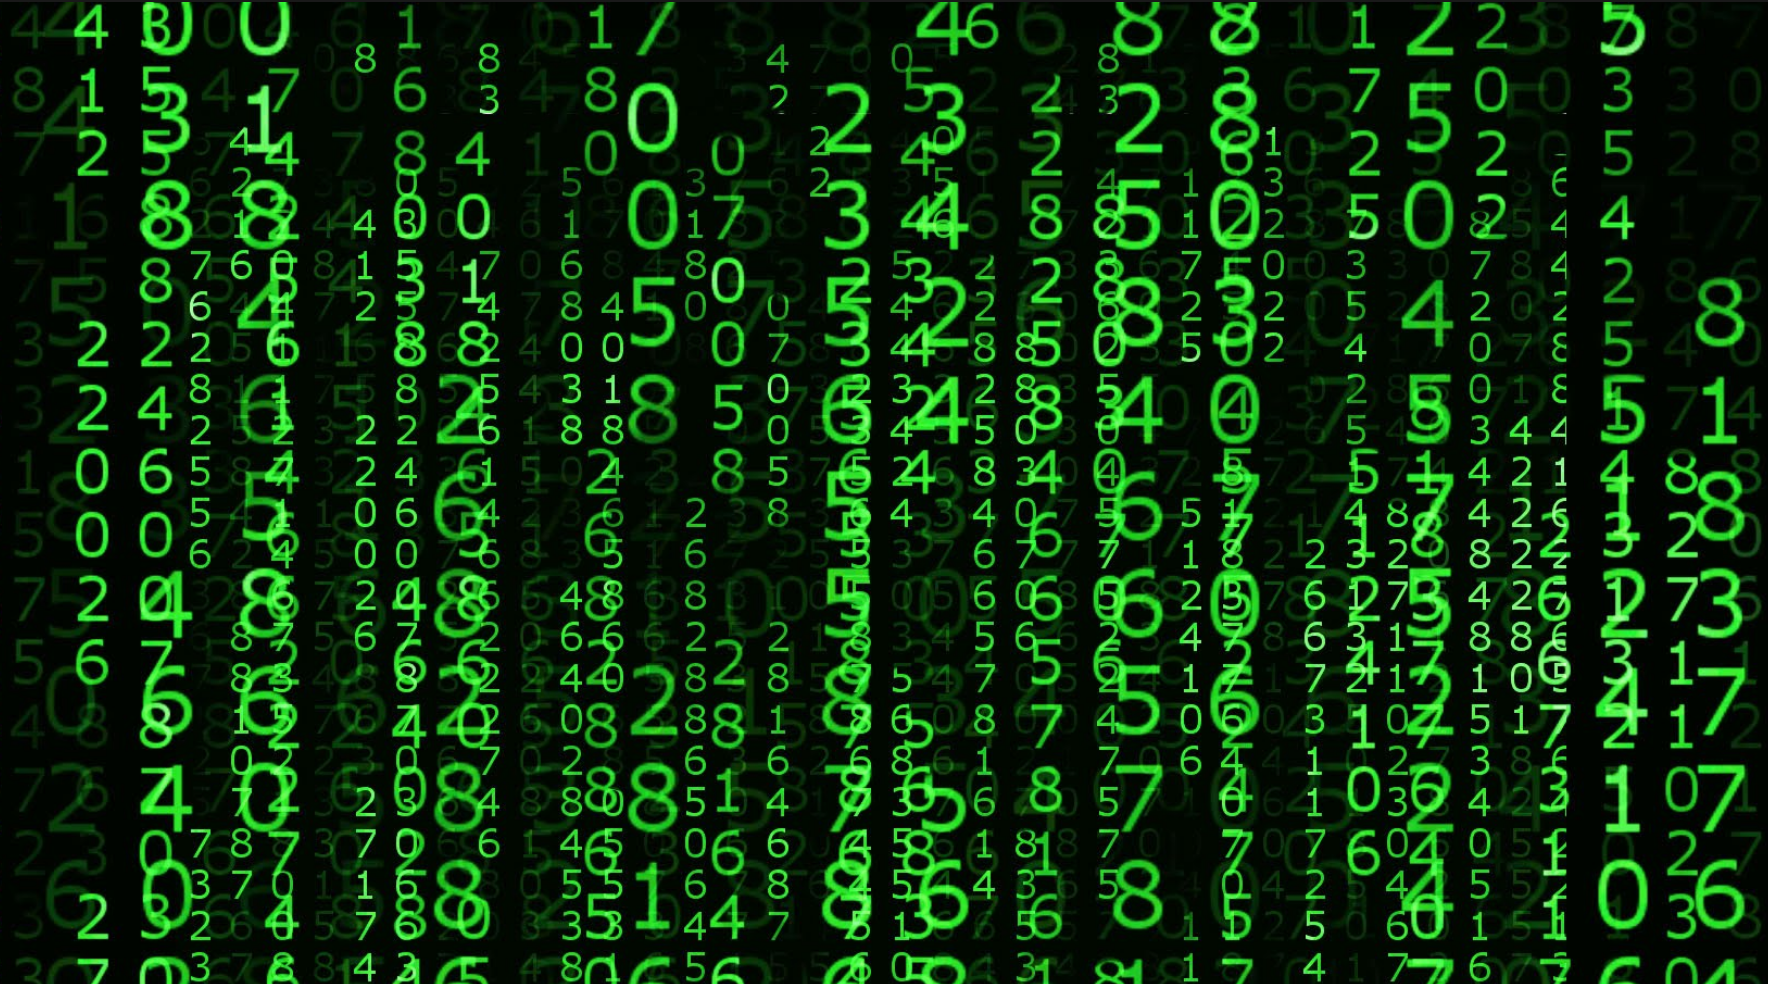 The matrix of data